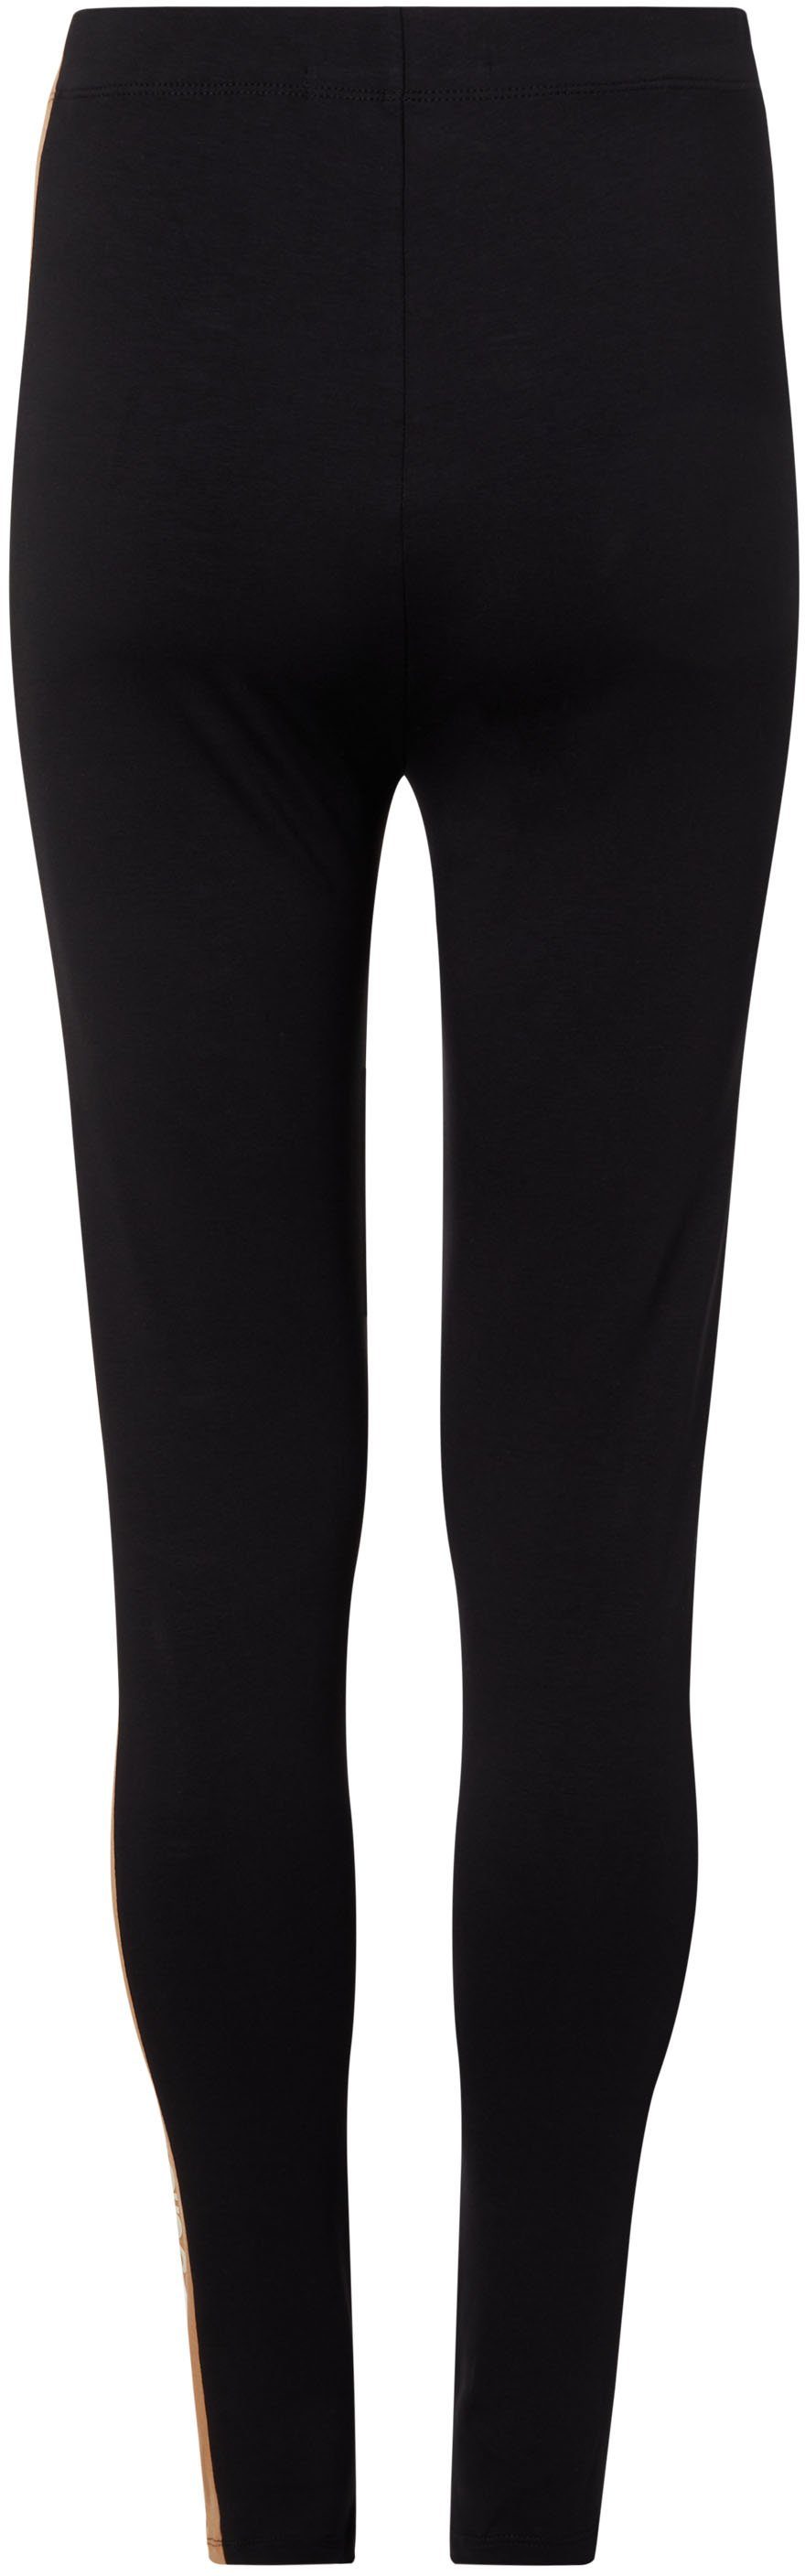 Calvin Klein Jeans BLOCKING in Timeless COLOR Ck LEGGINGS mit Kontrastfarbe Camel Leggings Black/ CK-Schriftzug